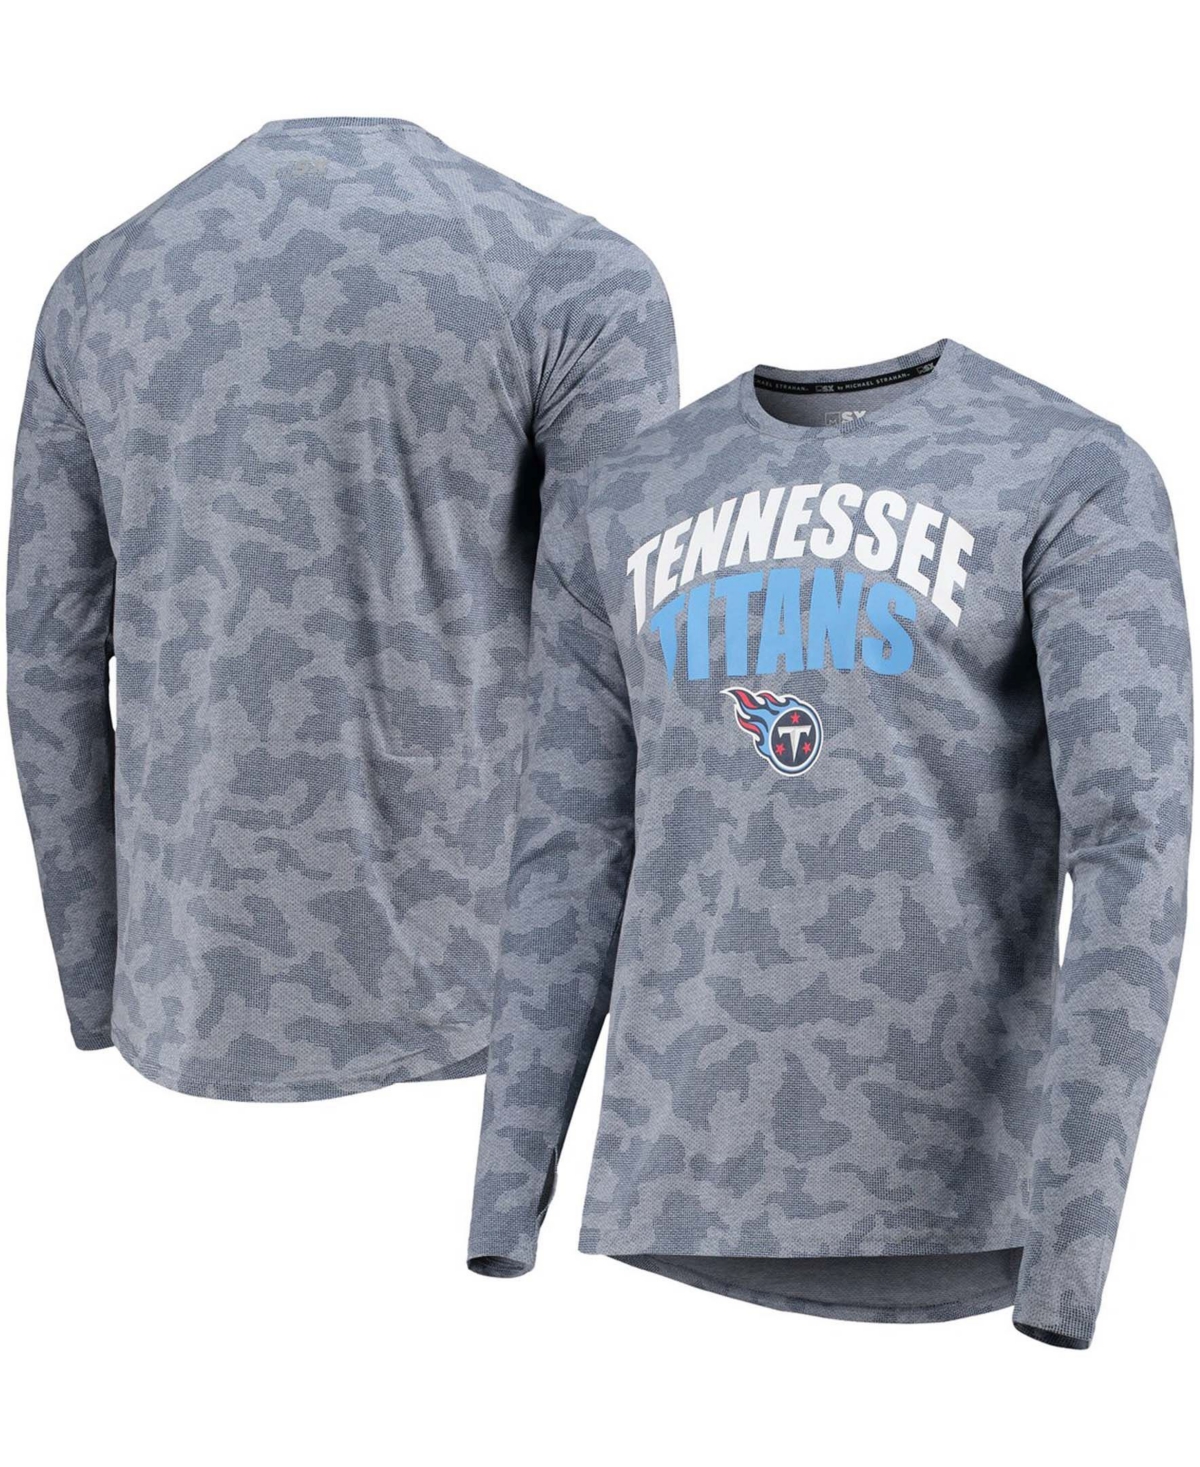 Men's Navy Tennessee Titans Camo Long Sleeve T-shirt - Navy